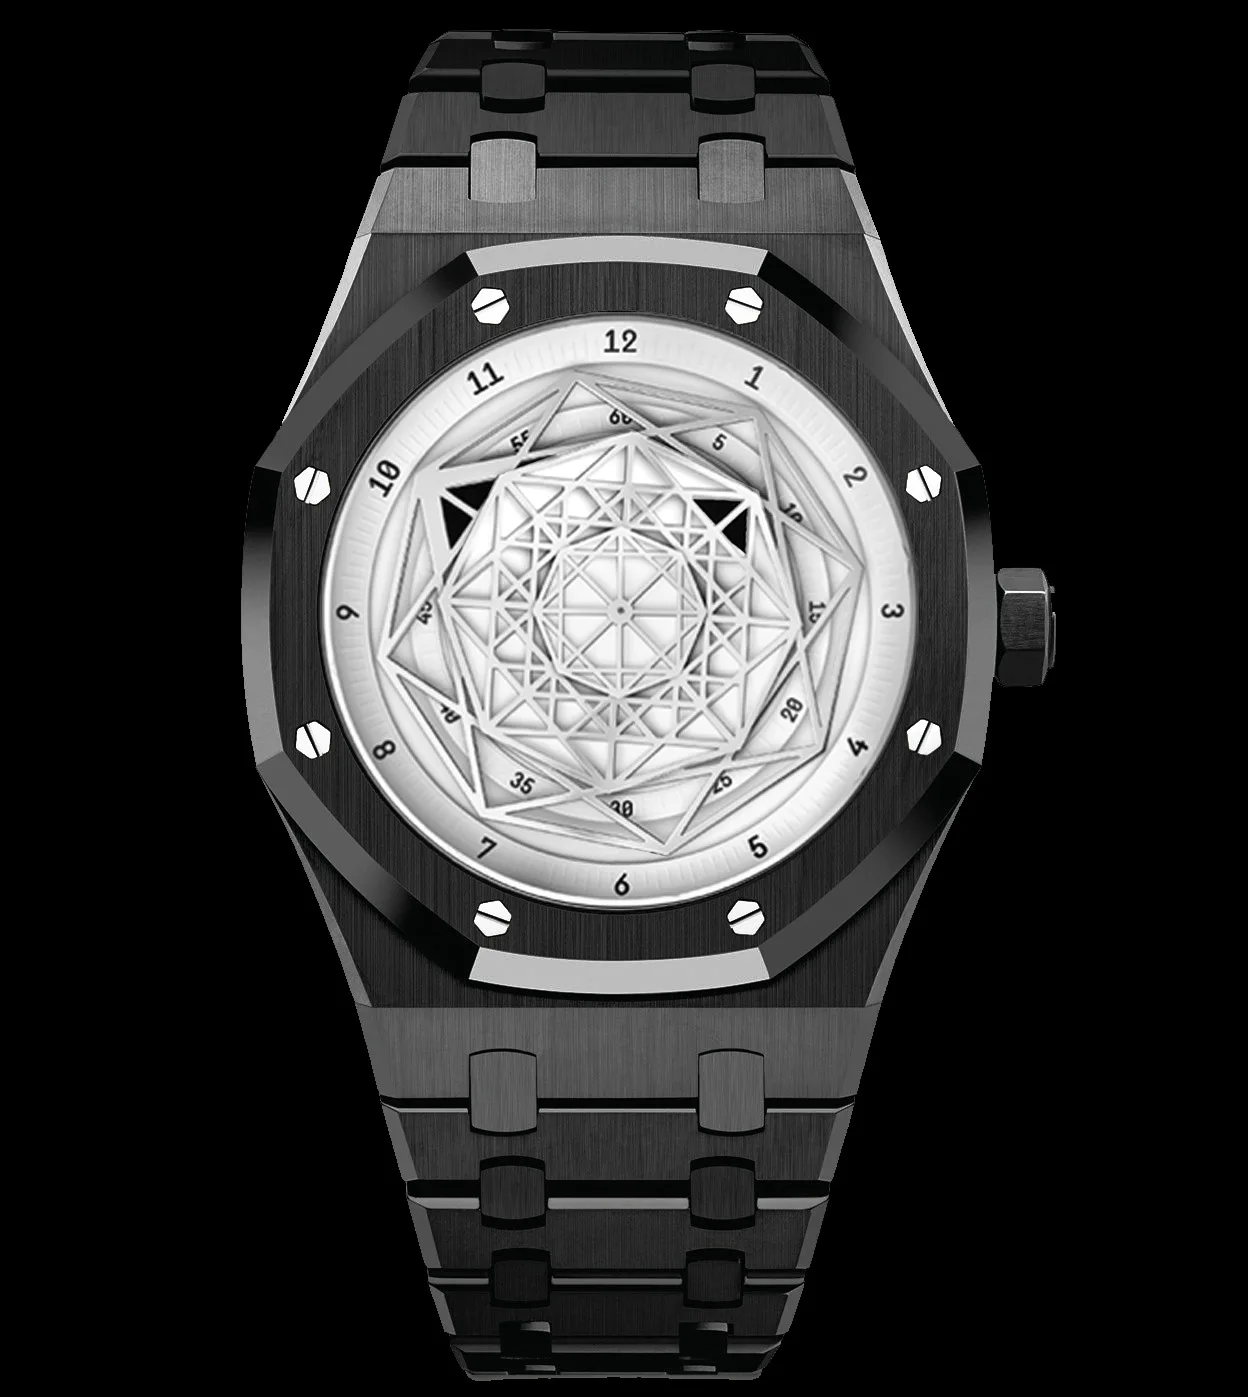 DIDUN Automatic mechanical watch stainless steel fashion waterproof luminous men's watch